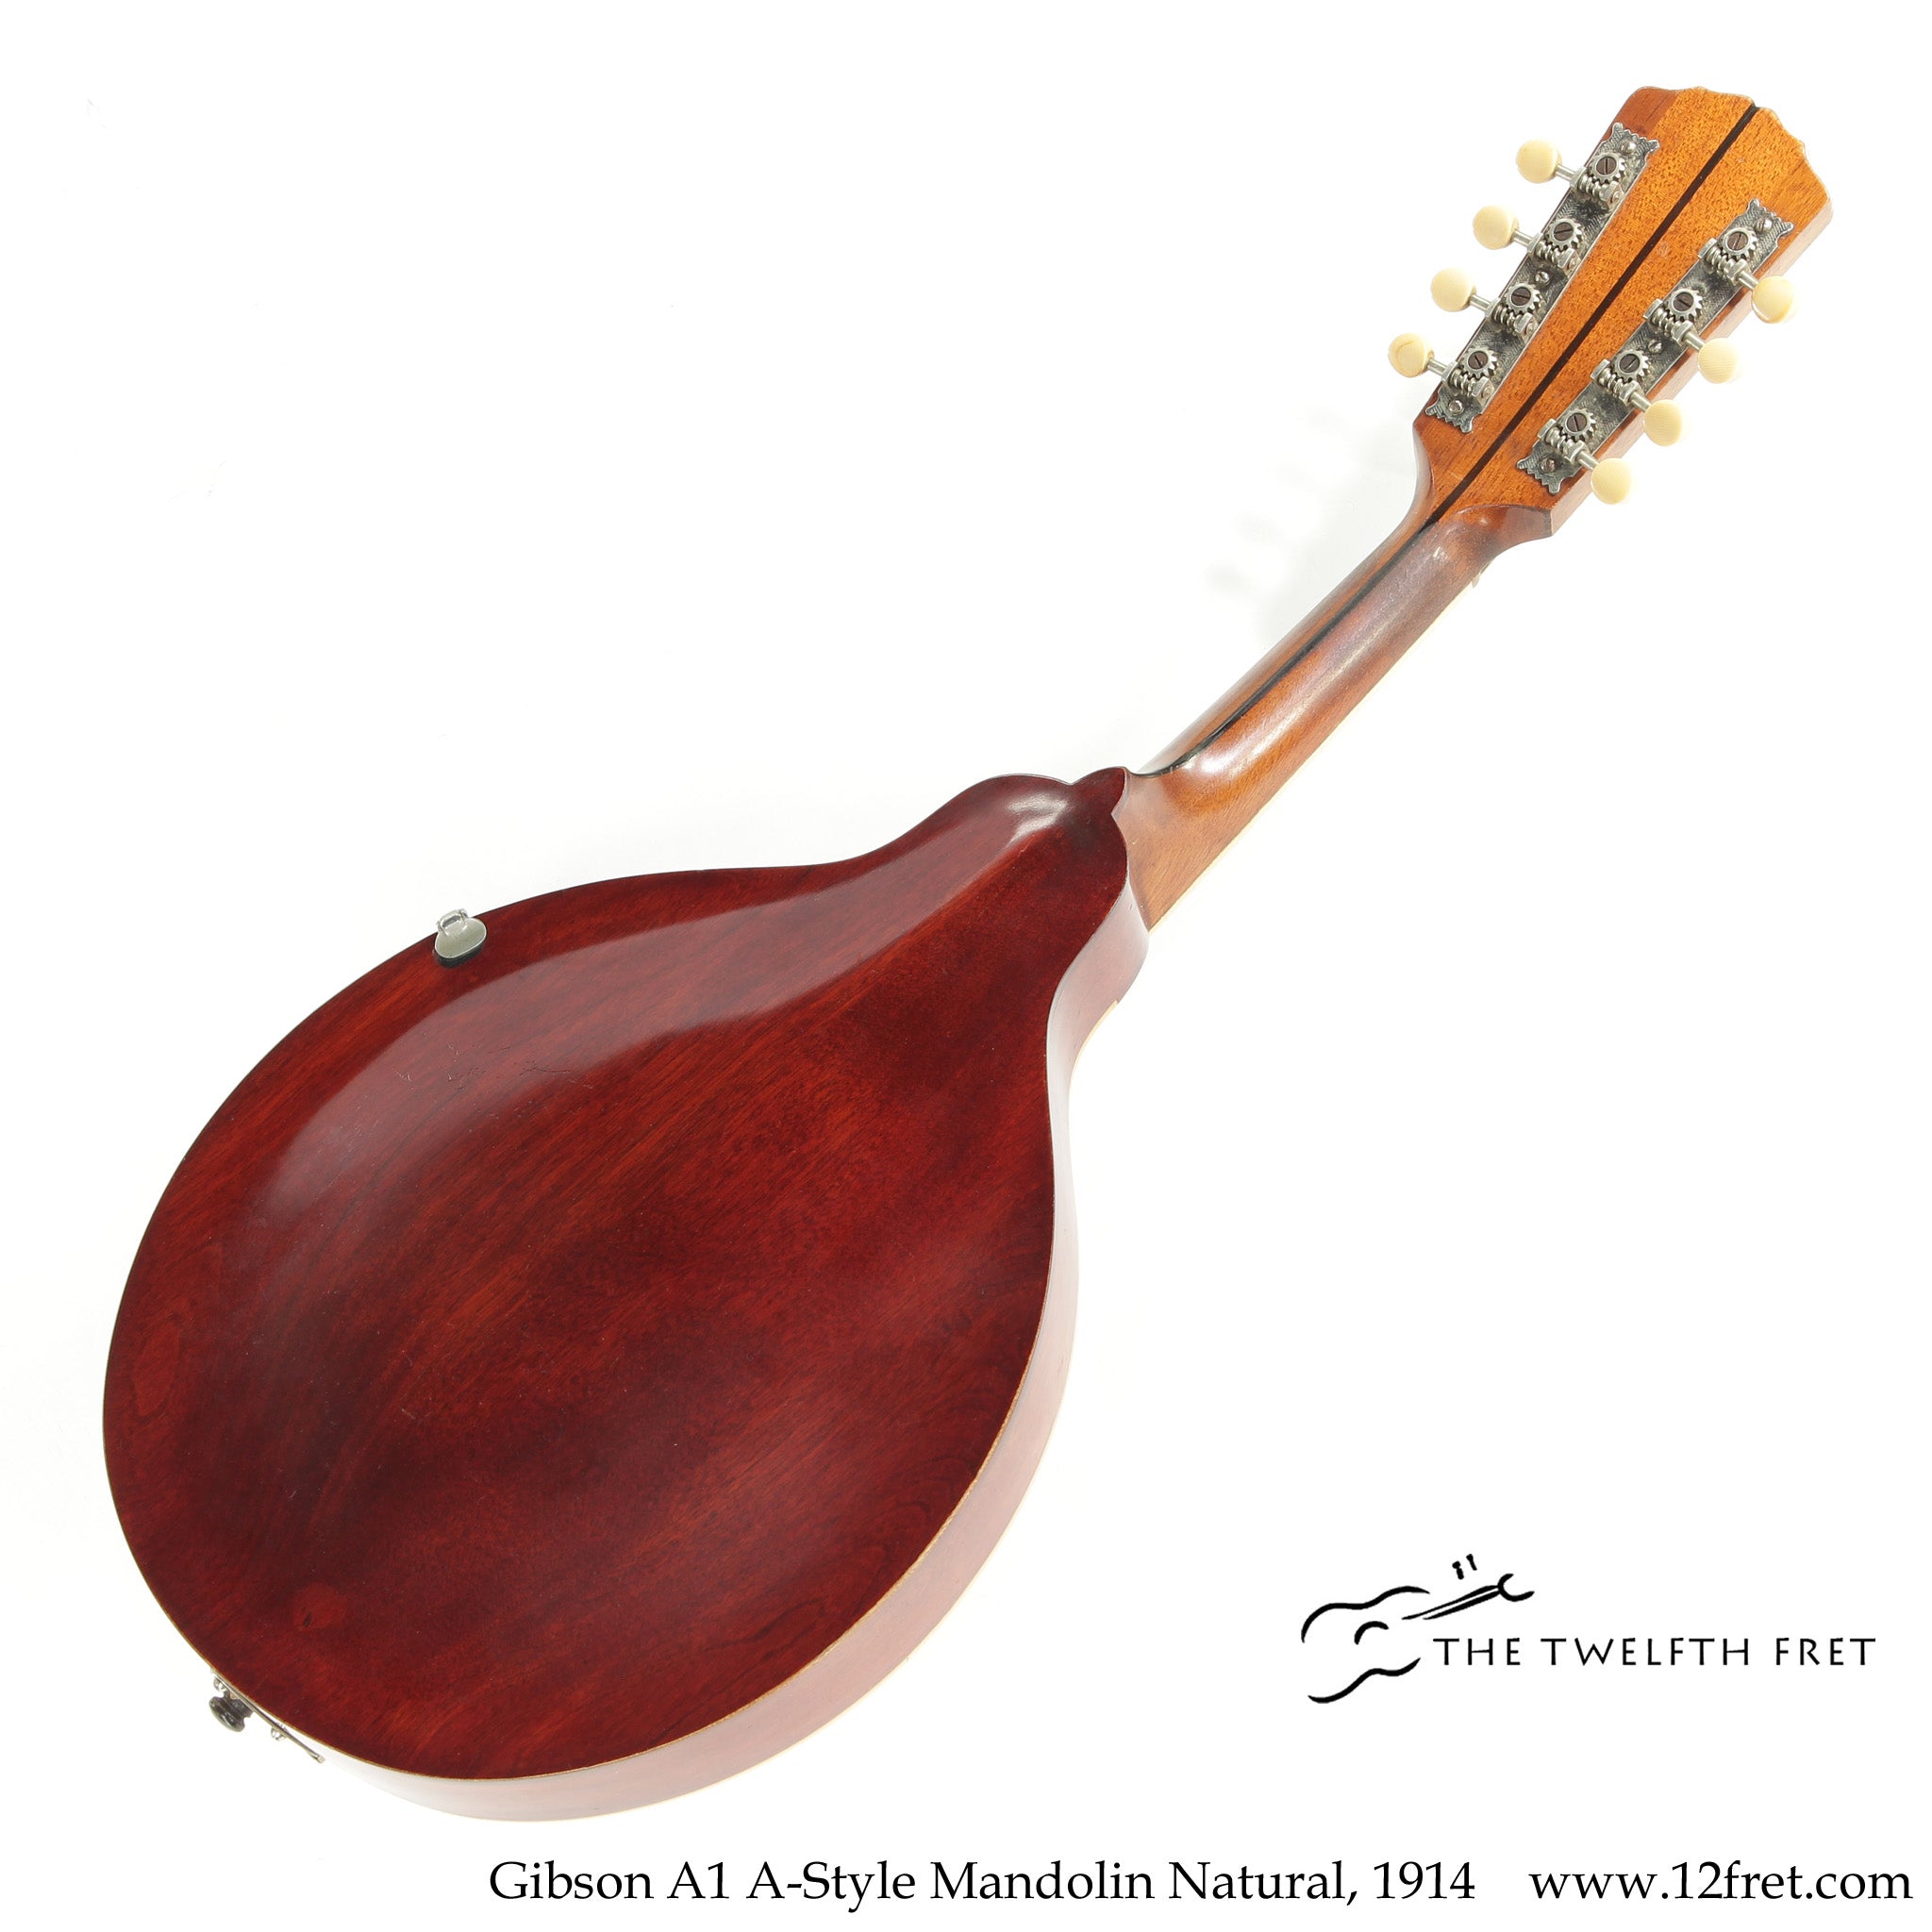 Gibson A1 A-Style Mandolin Natural, 1914